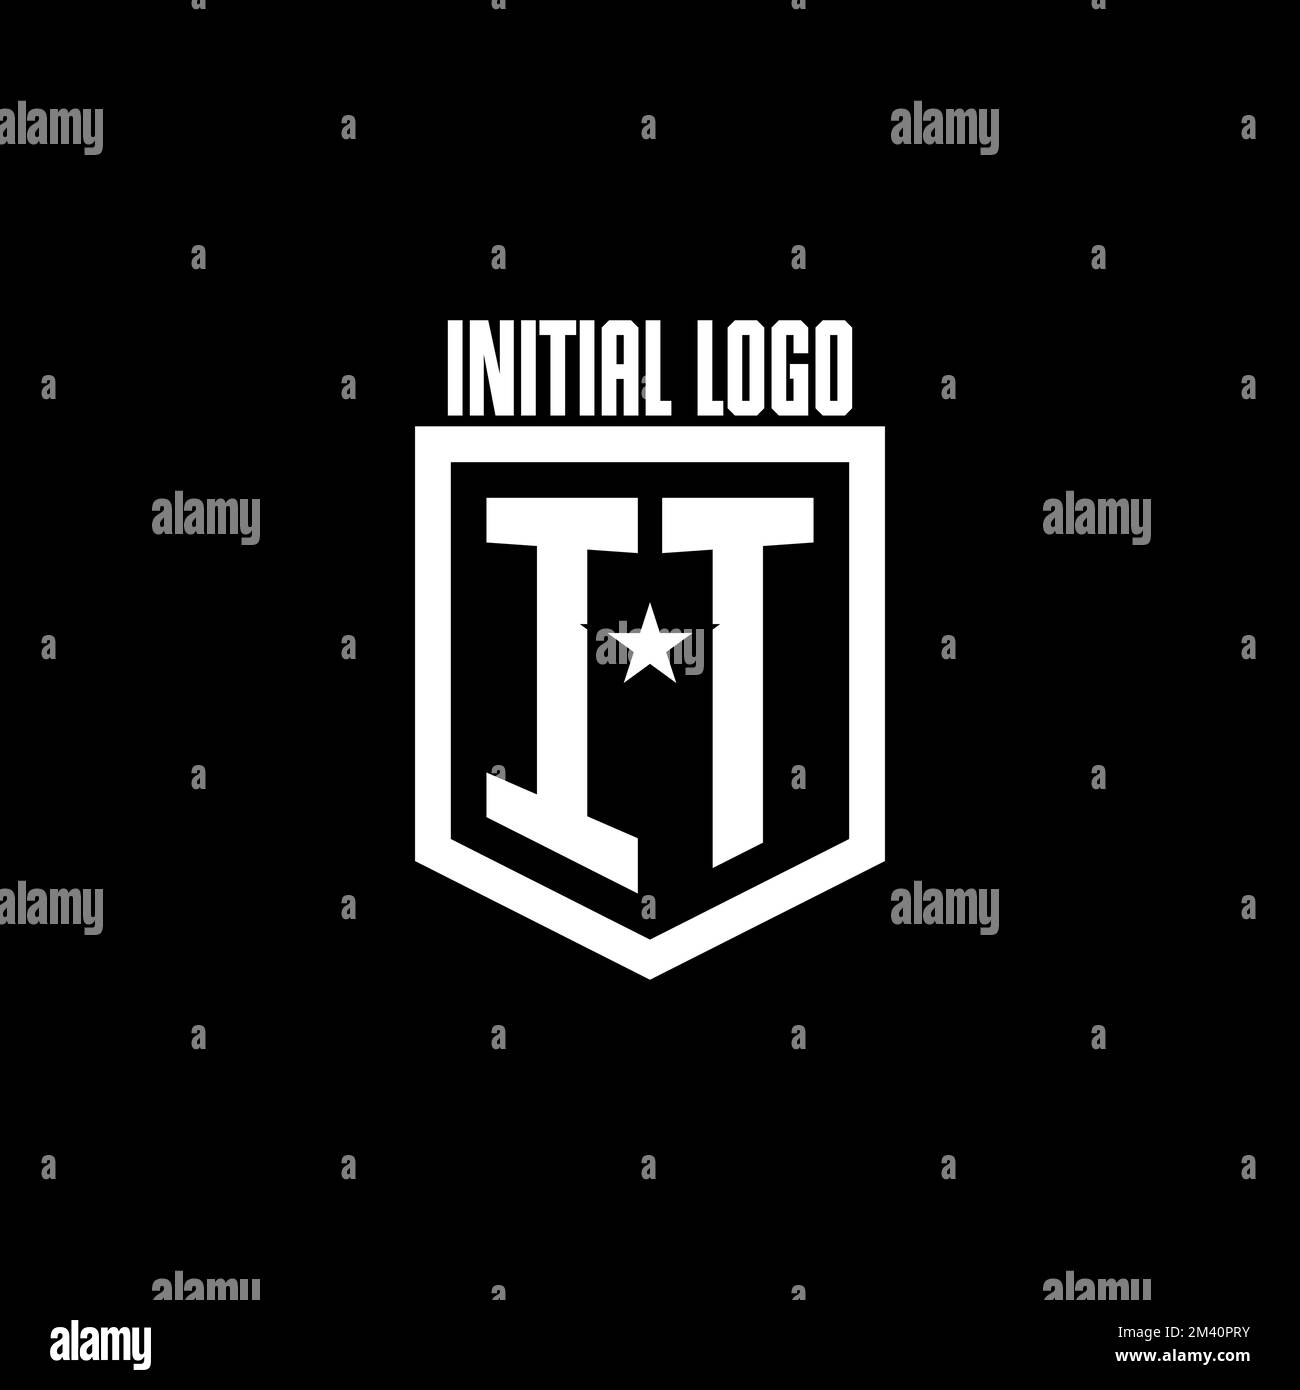 Premium Vector  Initial r gaming logo design template inspiration vector  illustration